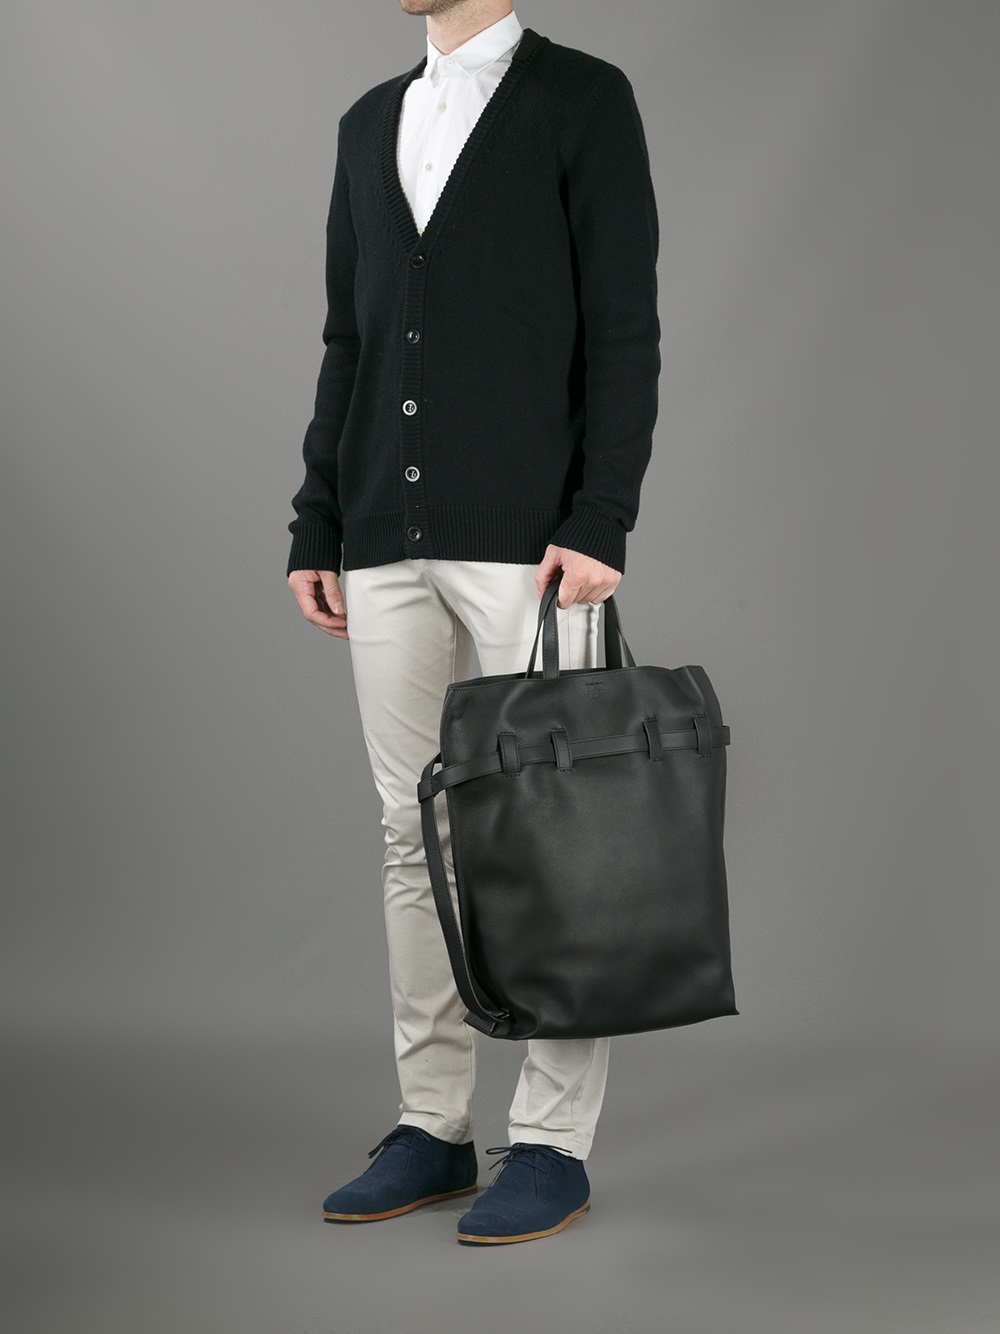 Fendi Tote Bag in Black for Men - Lyst